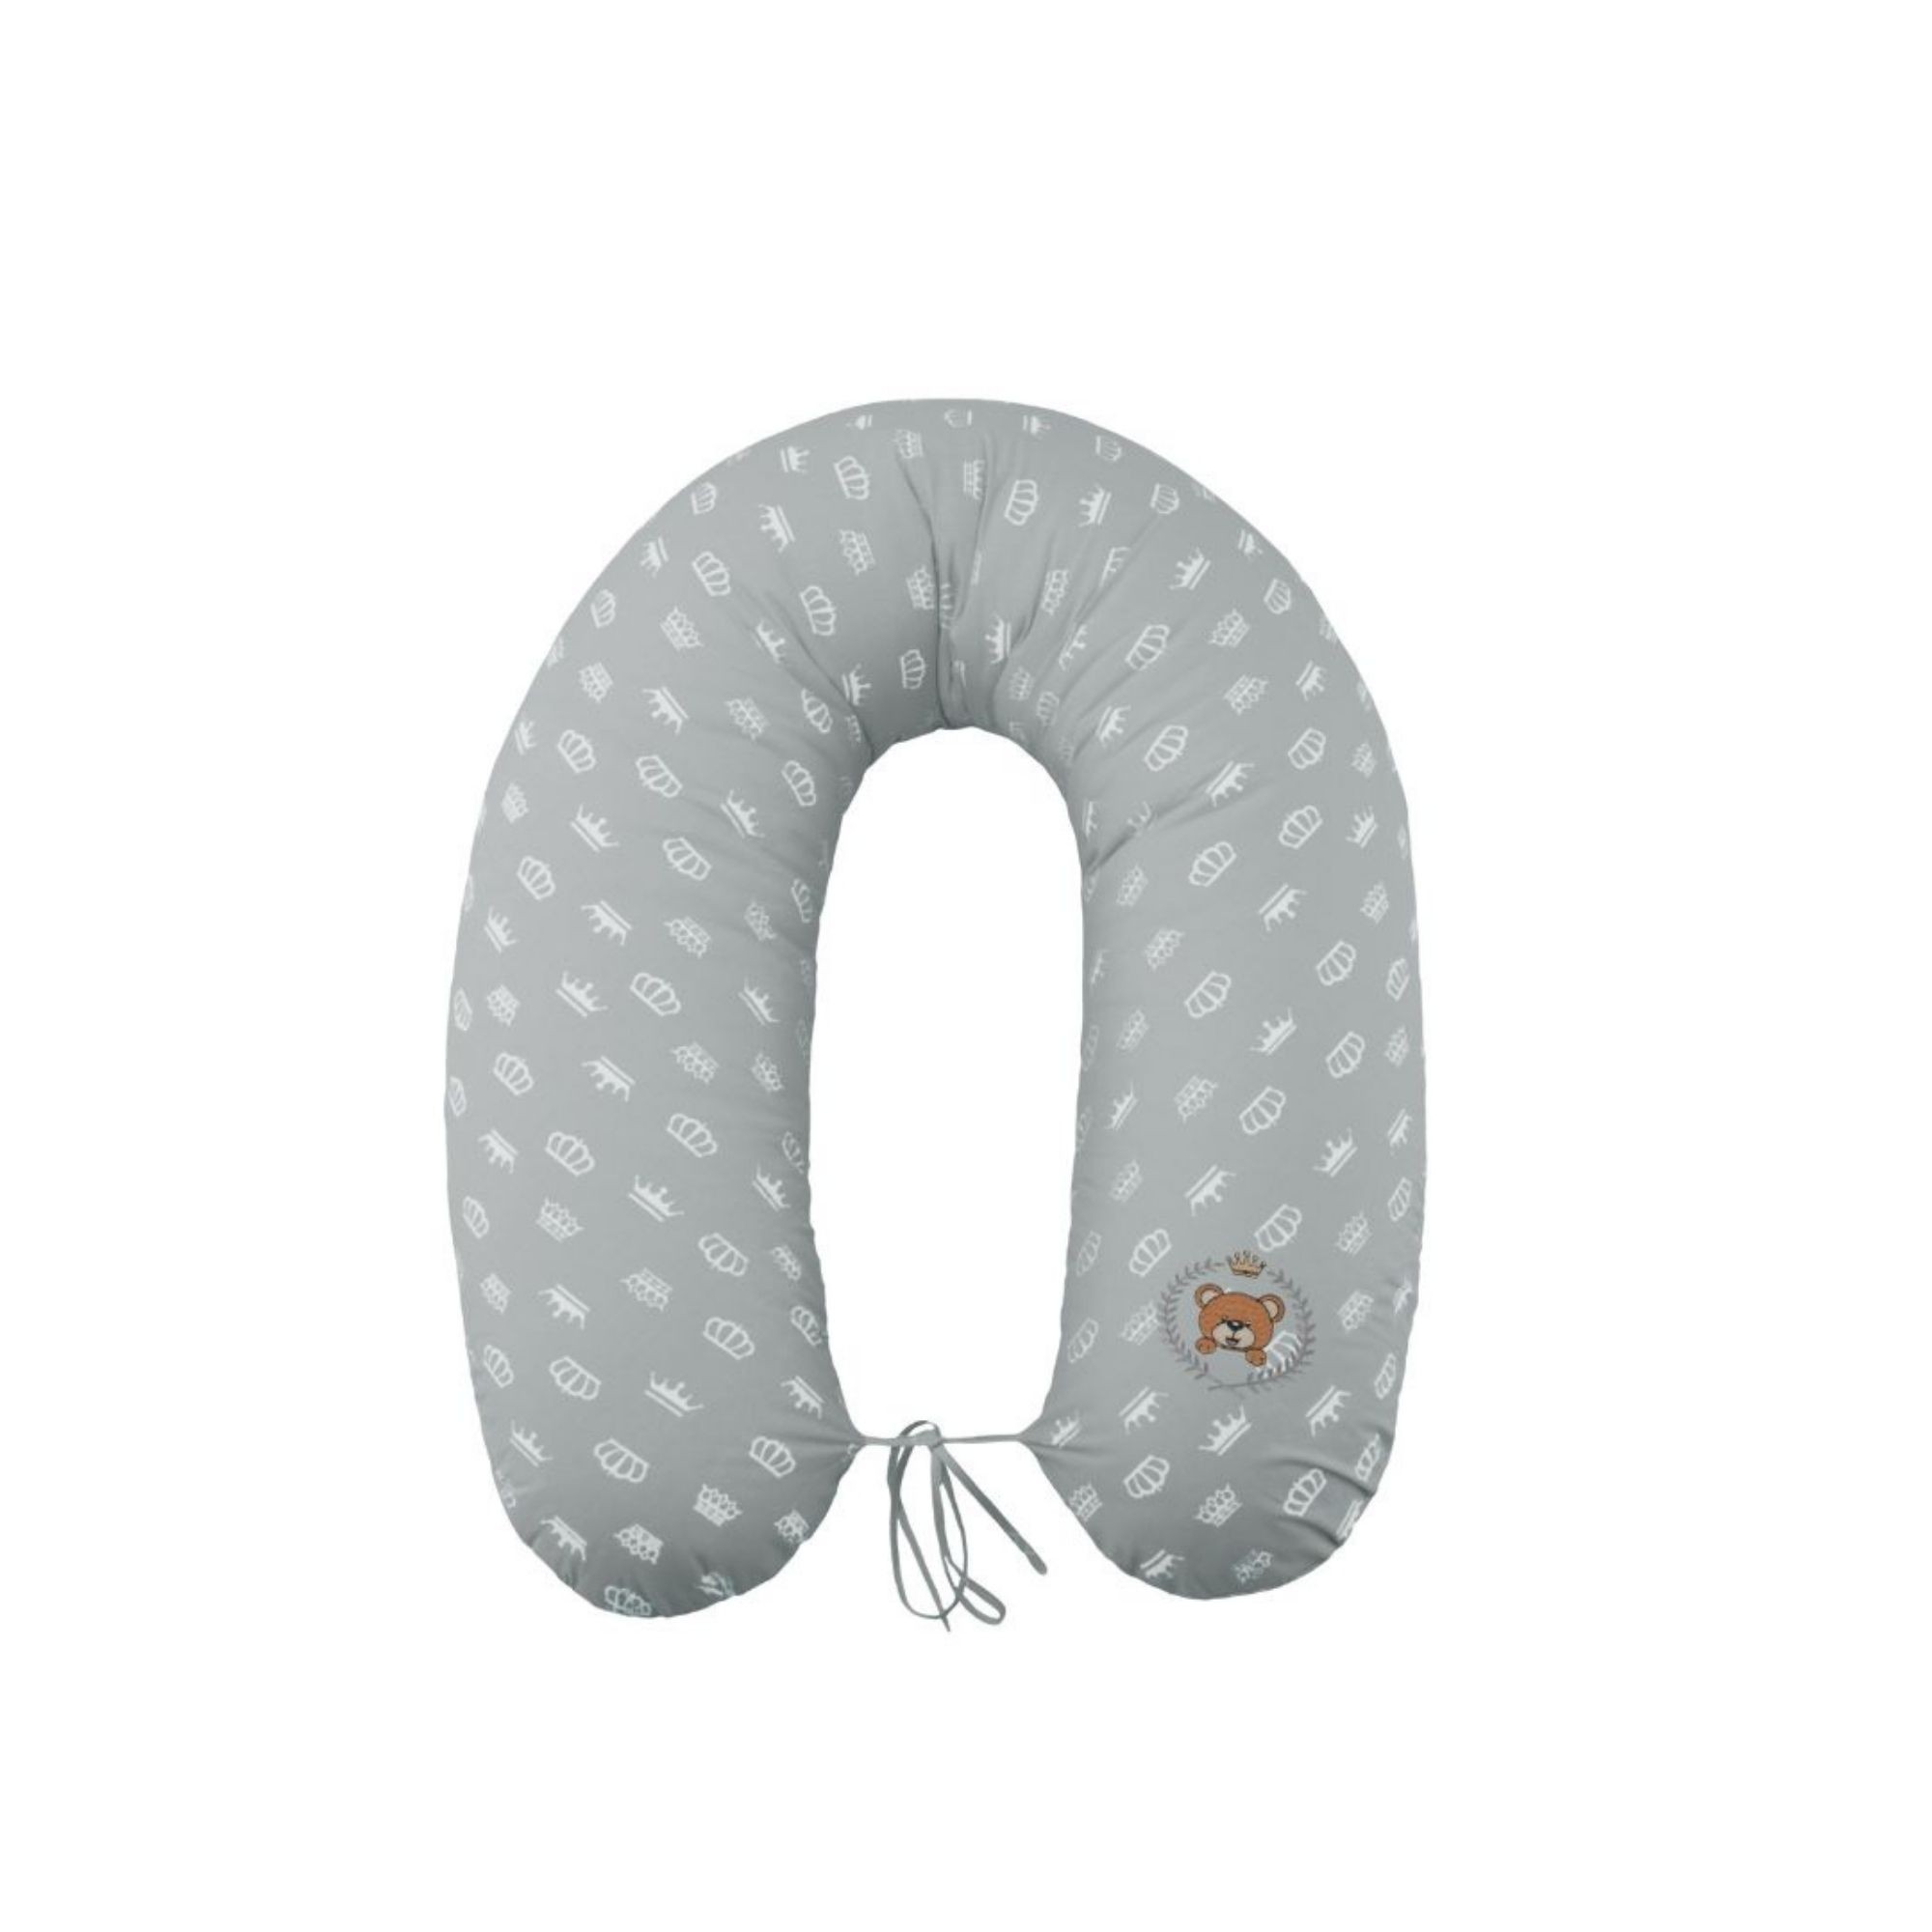 Nursing pillow, pillow for pregnancy TM SEI DESIGN 30x190 cm gray